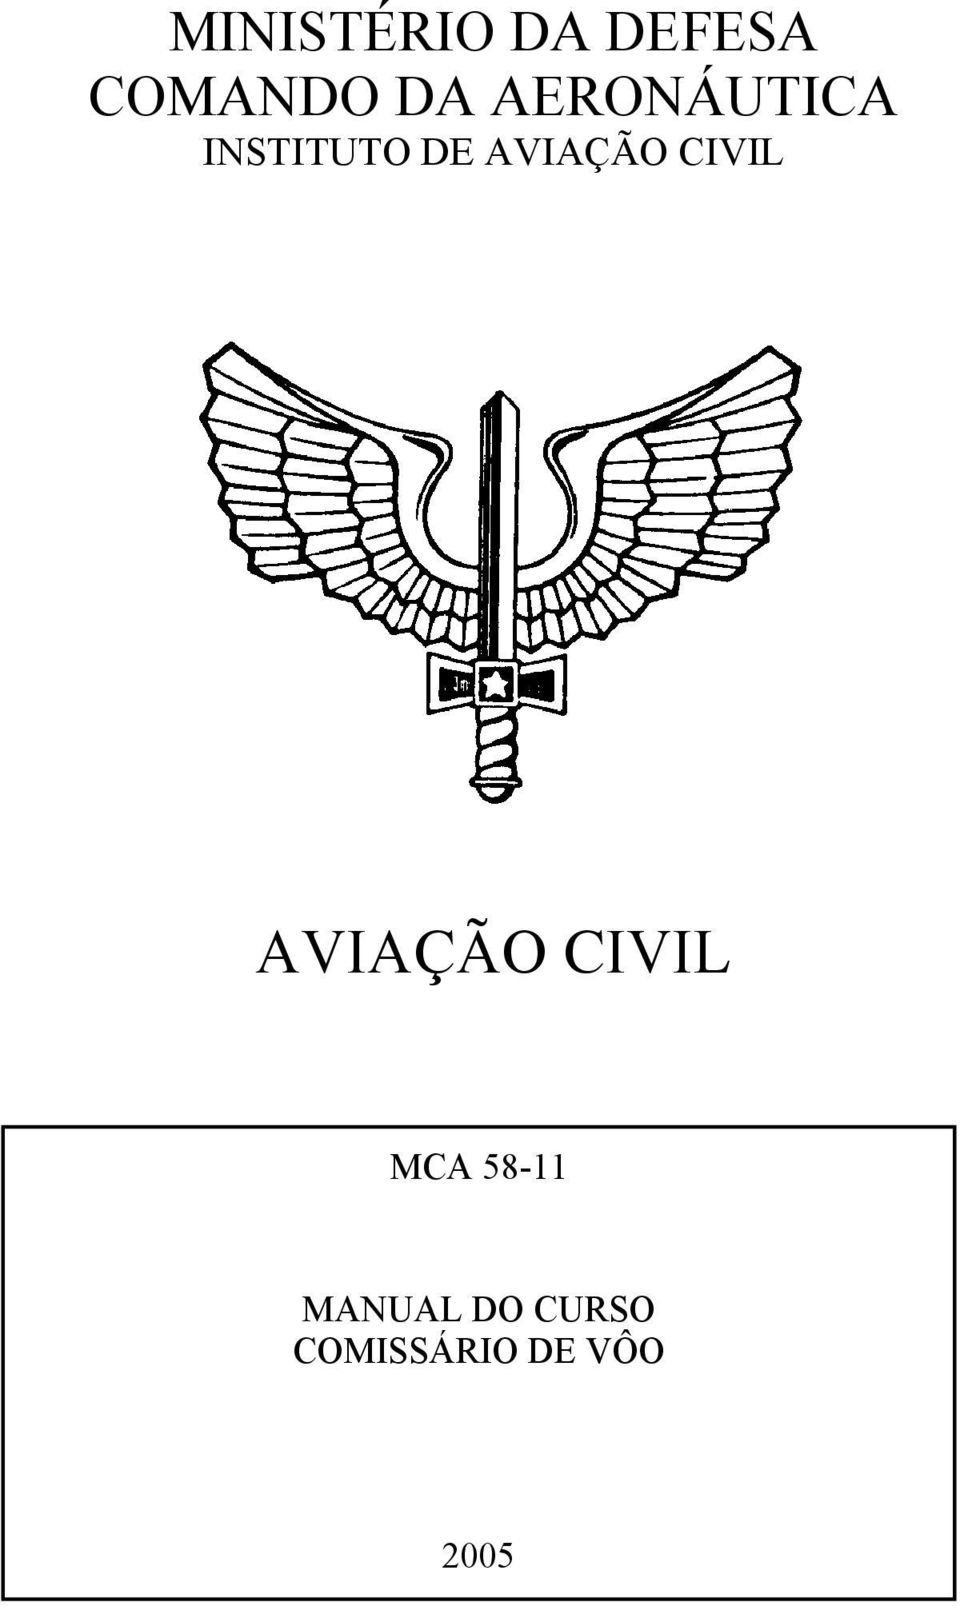 CIVIL AVIAÇÃO CIVIL MCA 58-11